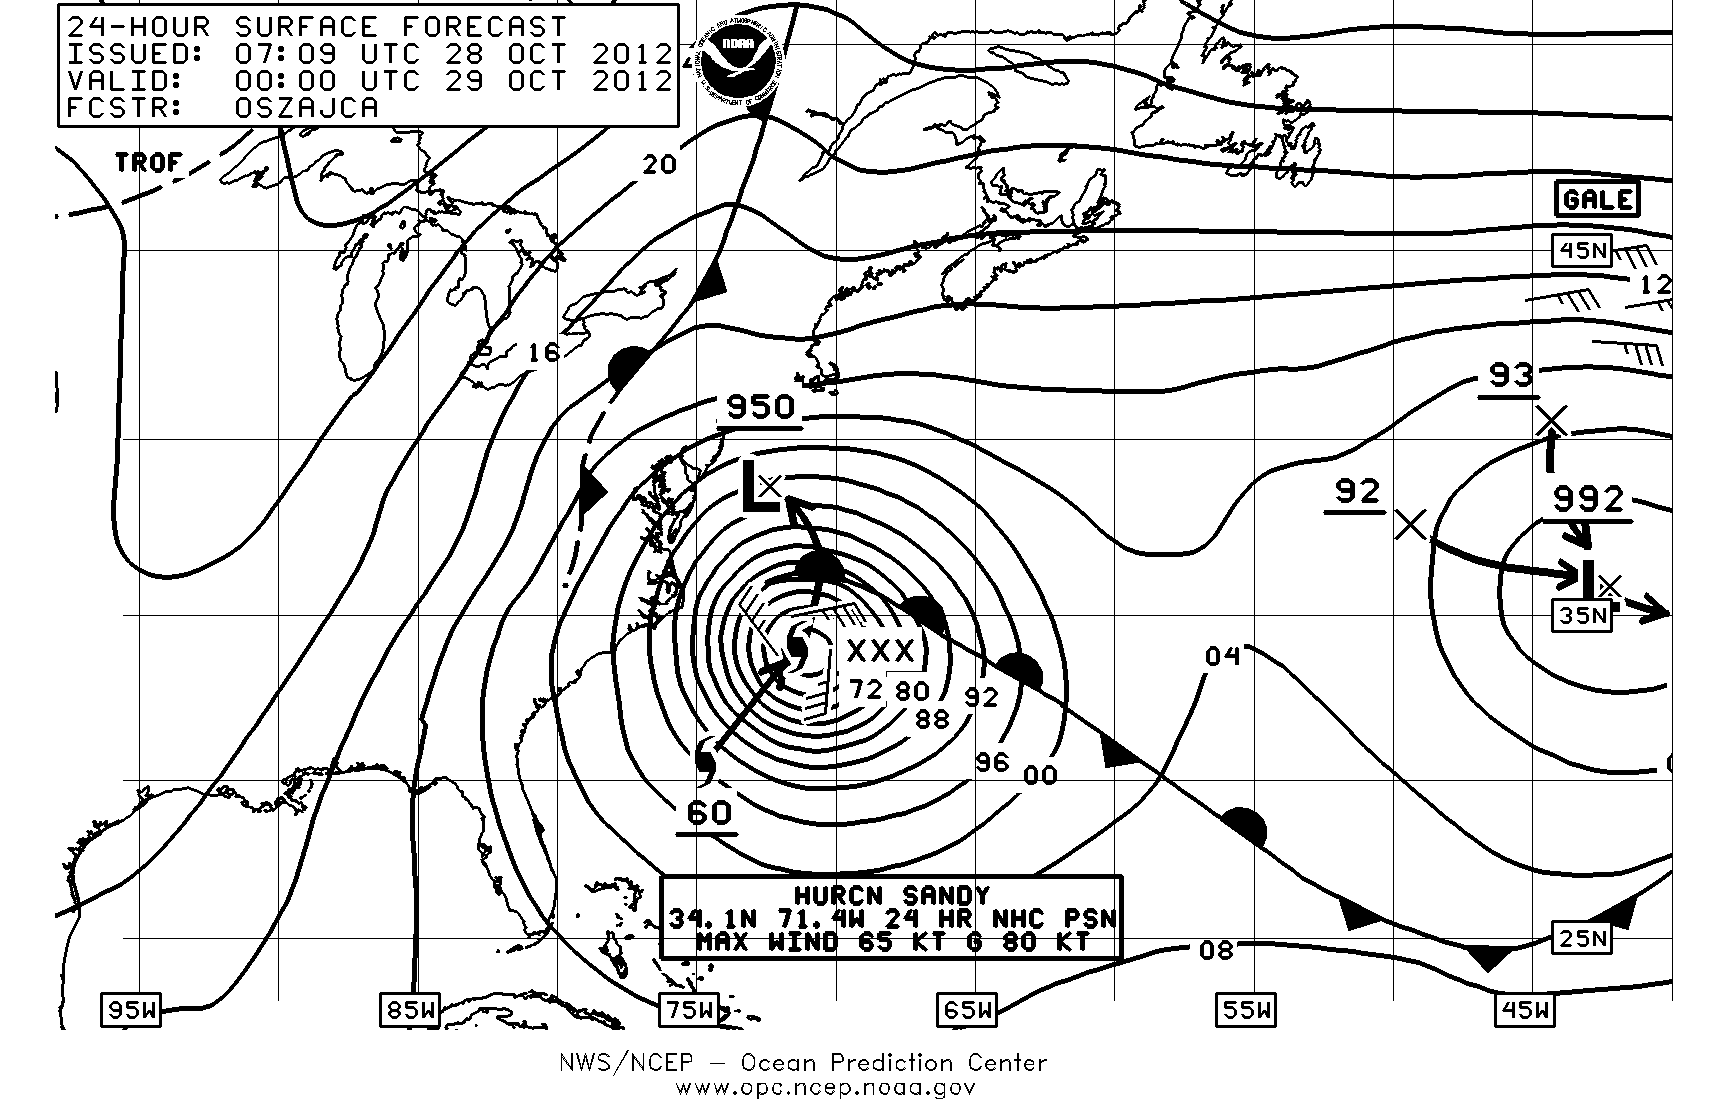 24 Hour West Atlantic Surface Forecast